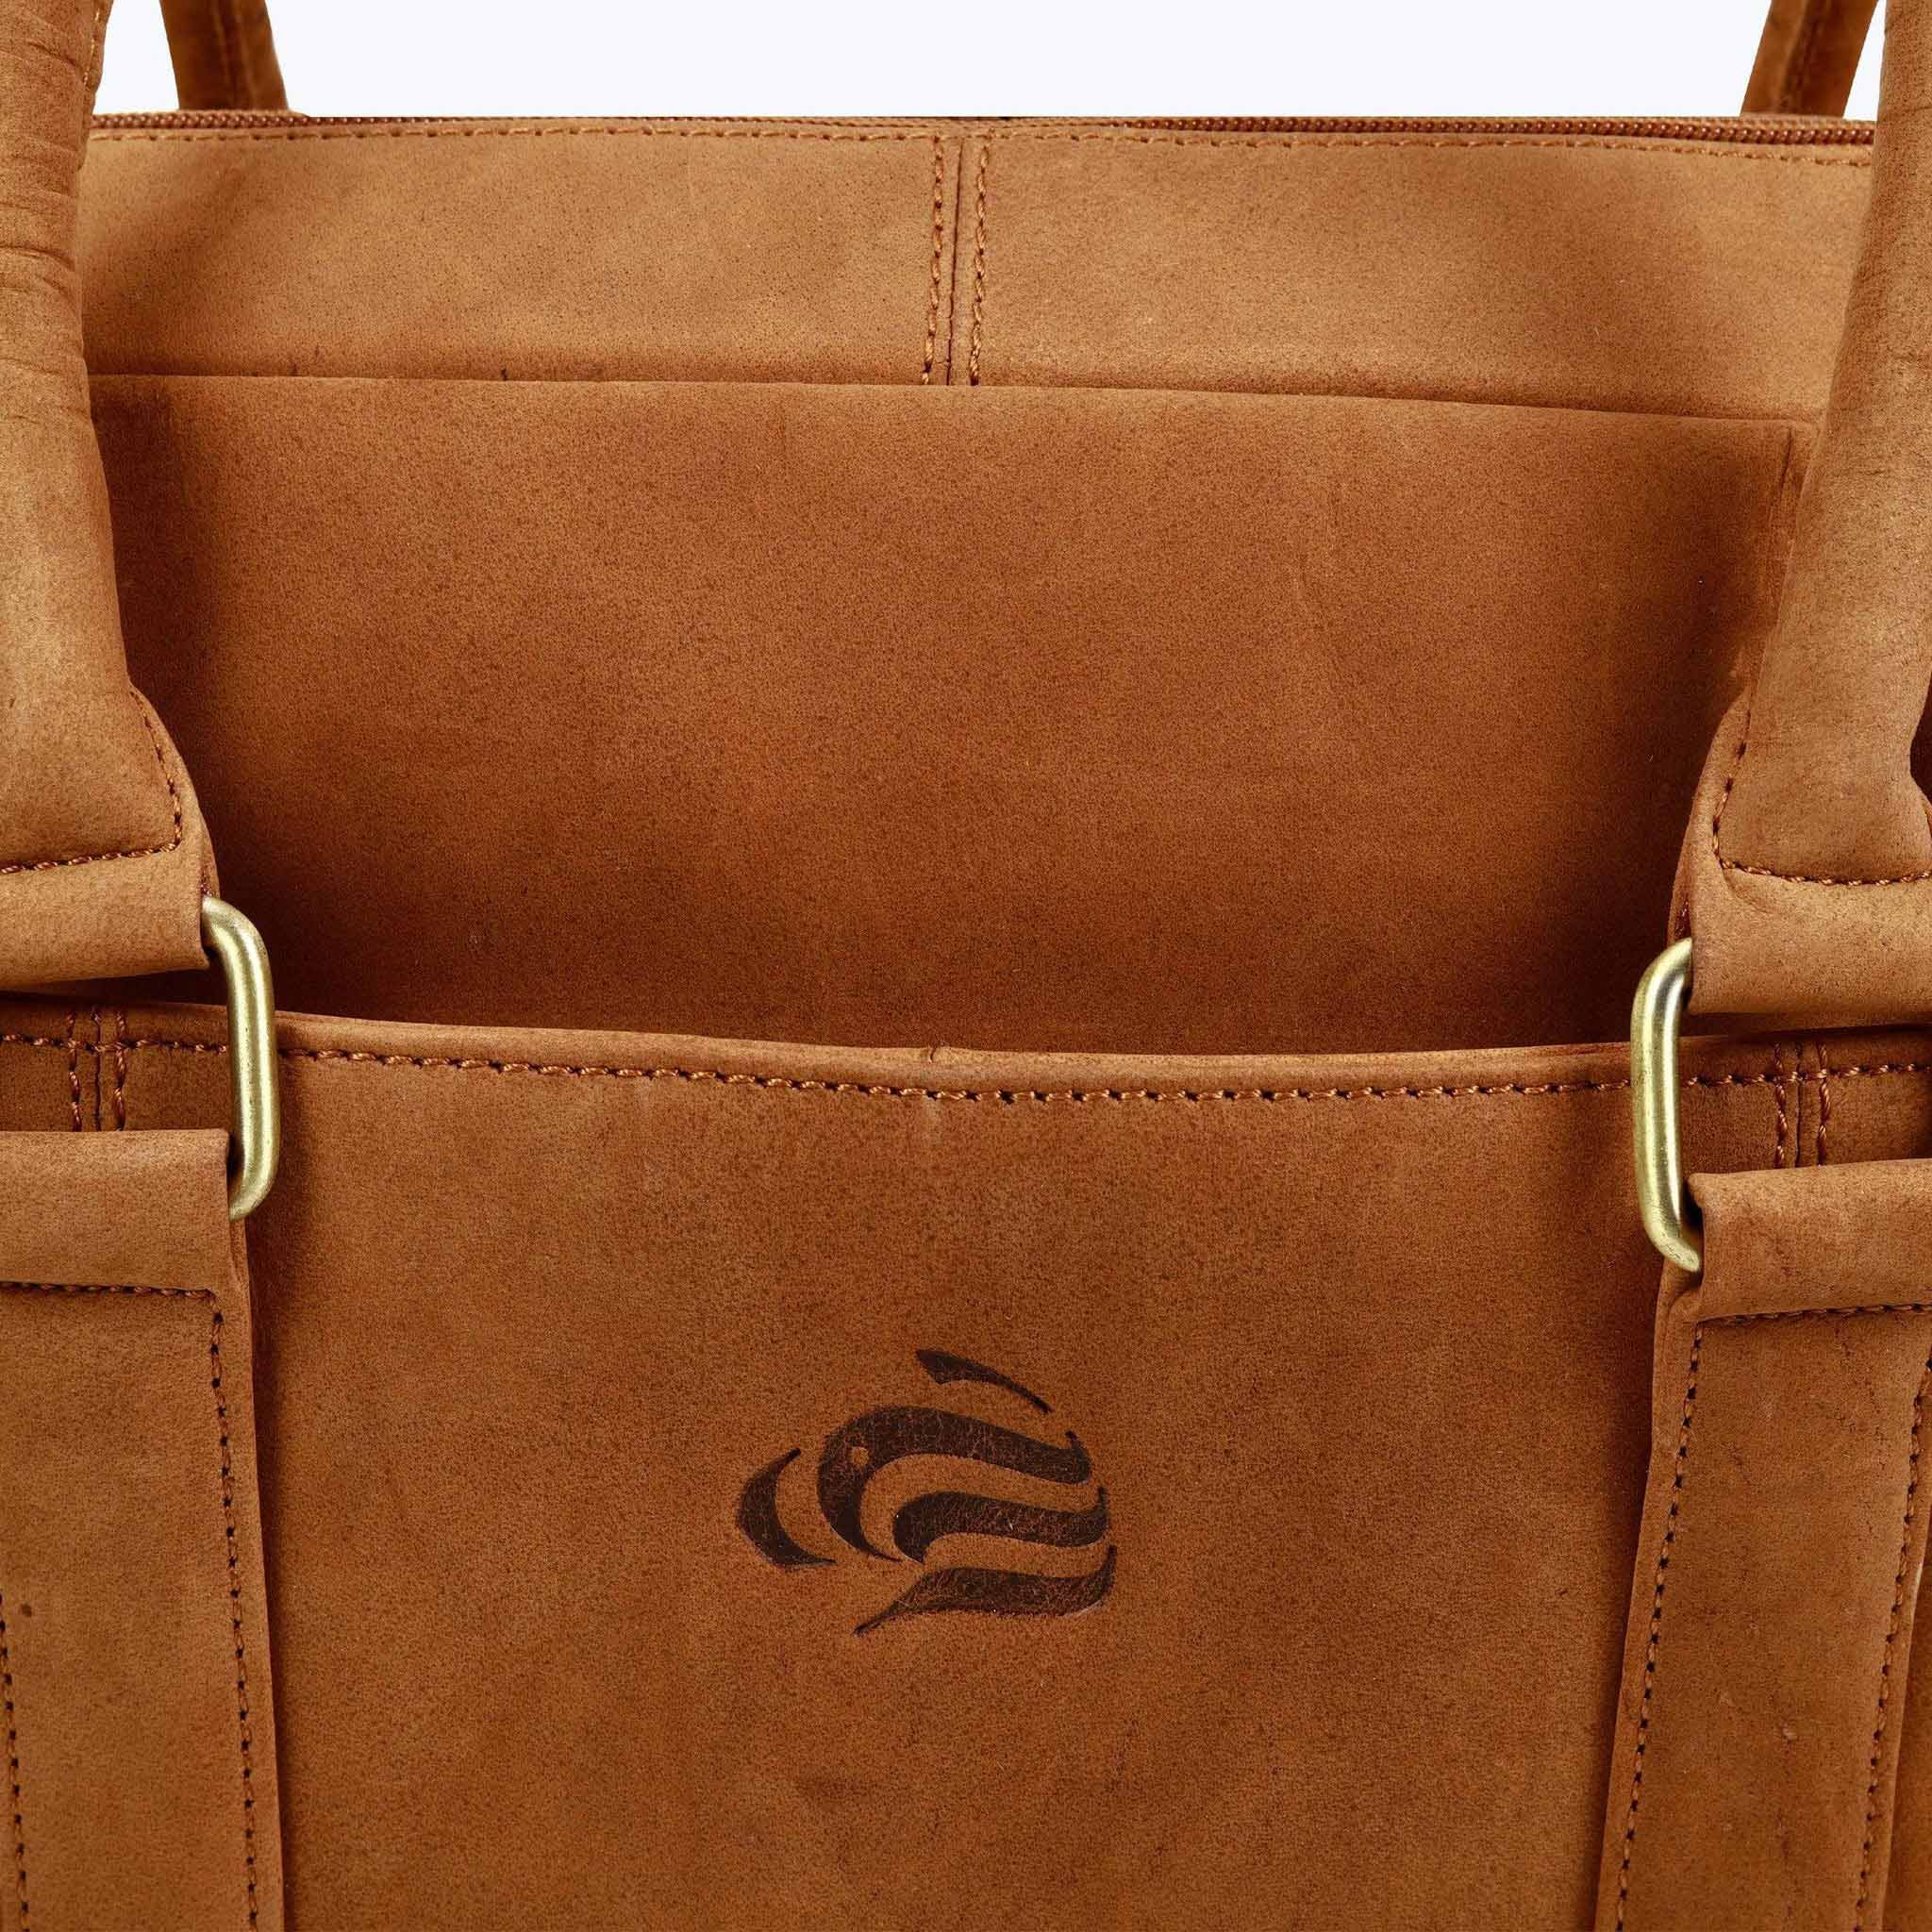 Vintage Leather Gear Bag Tan The Premium Slim Laptop Bag